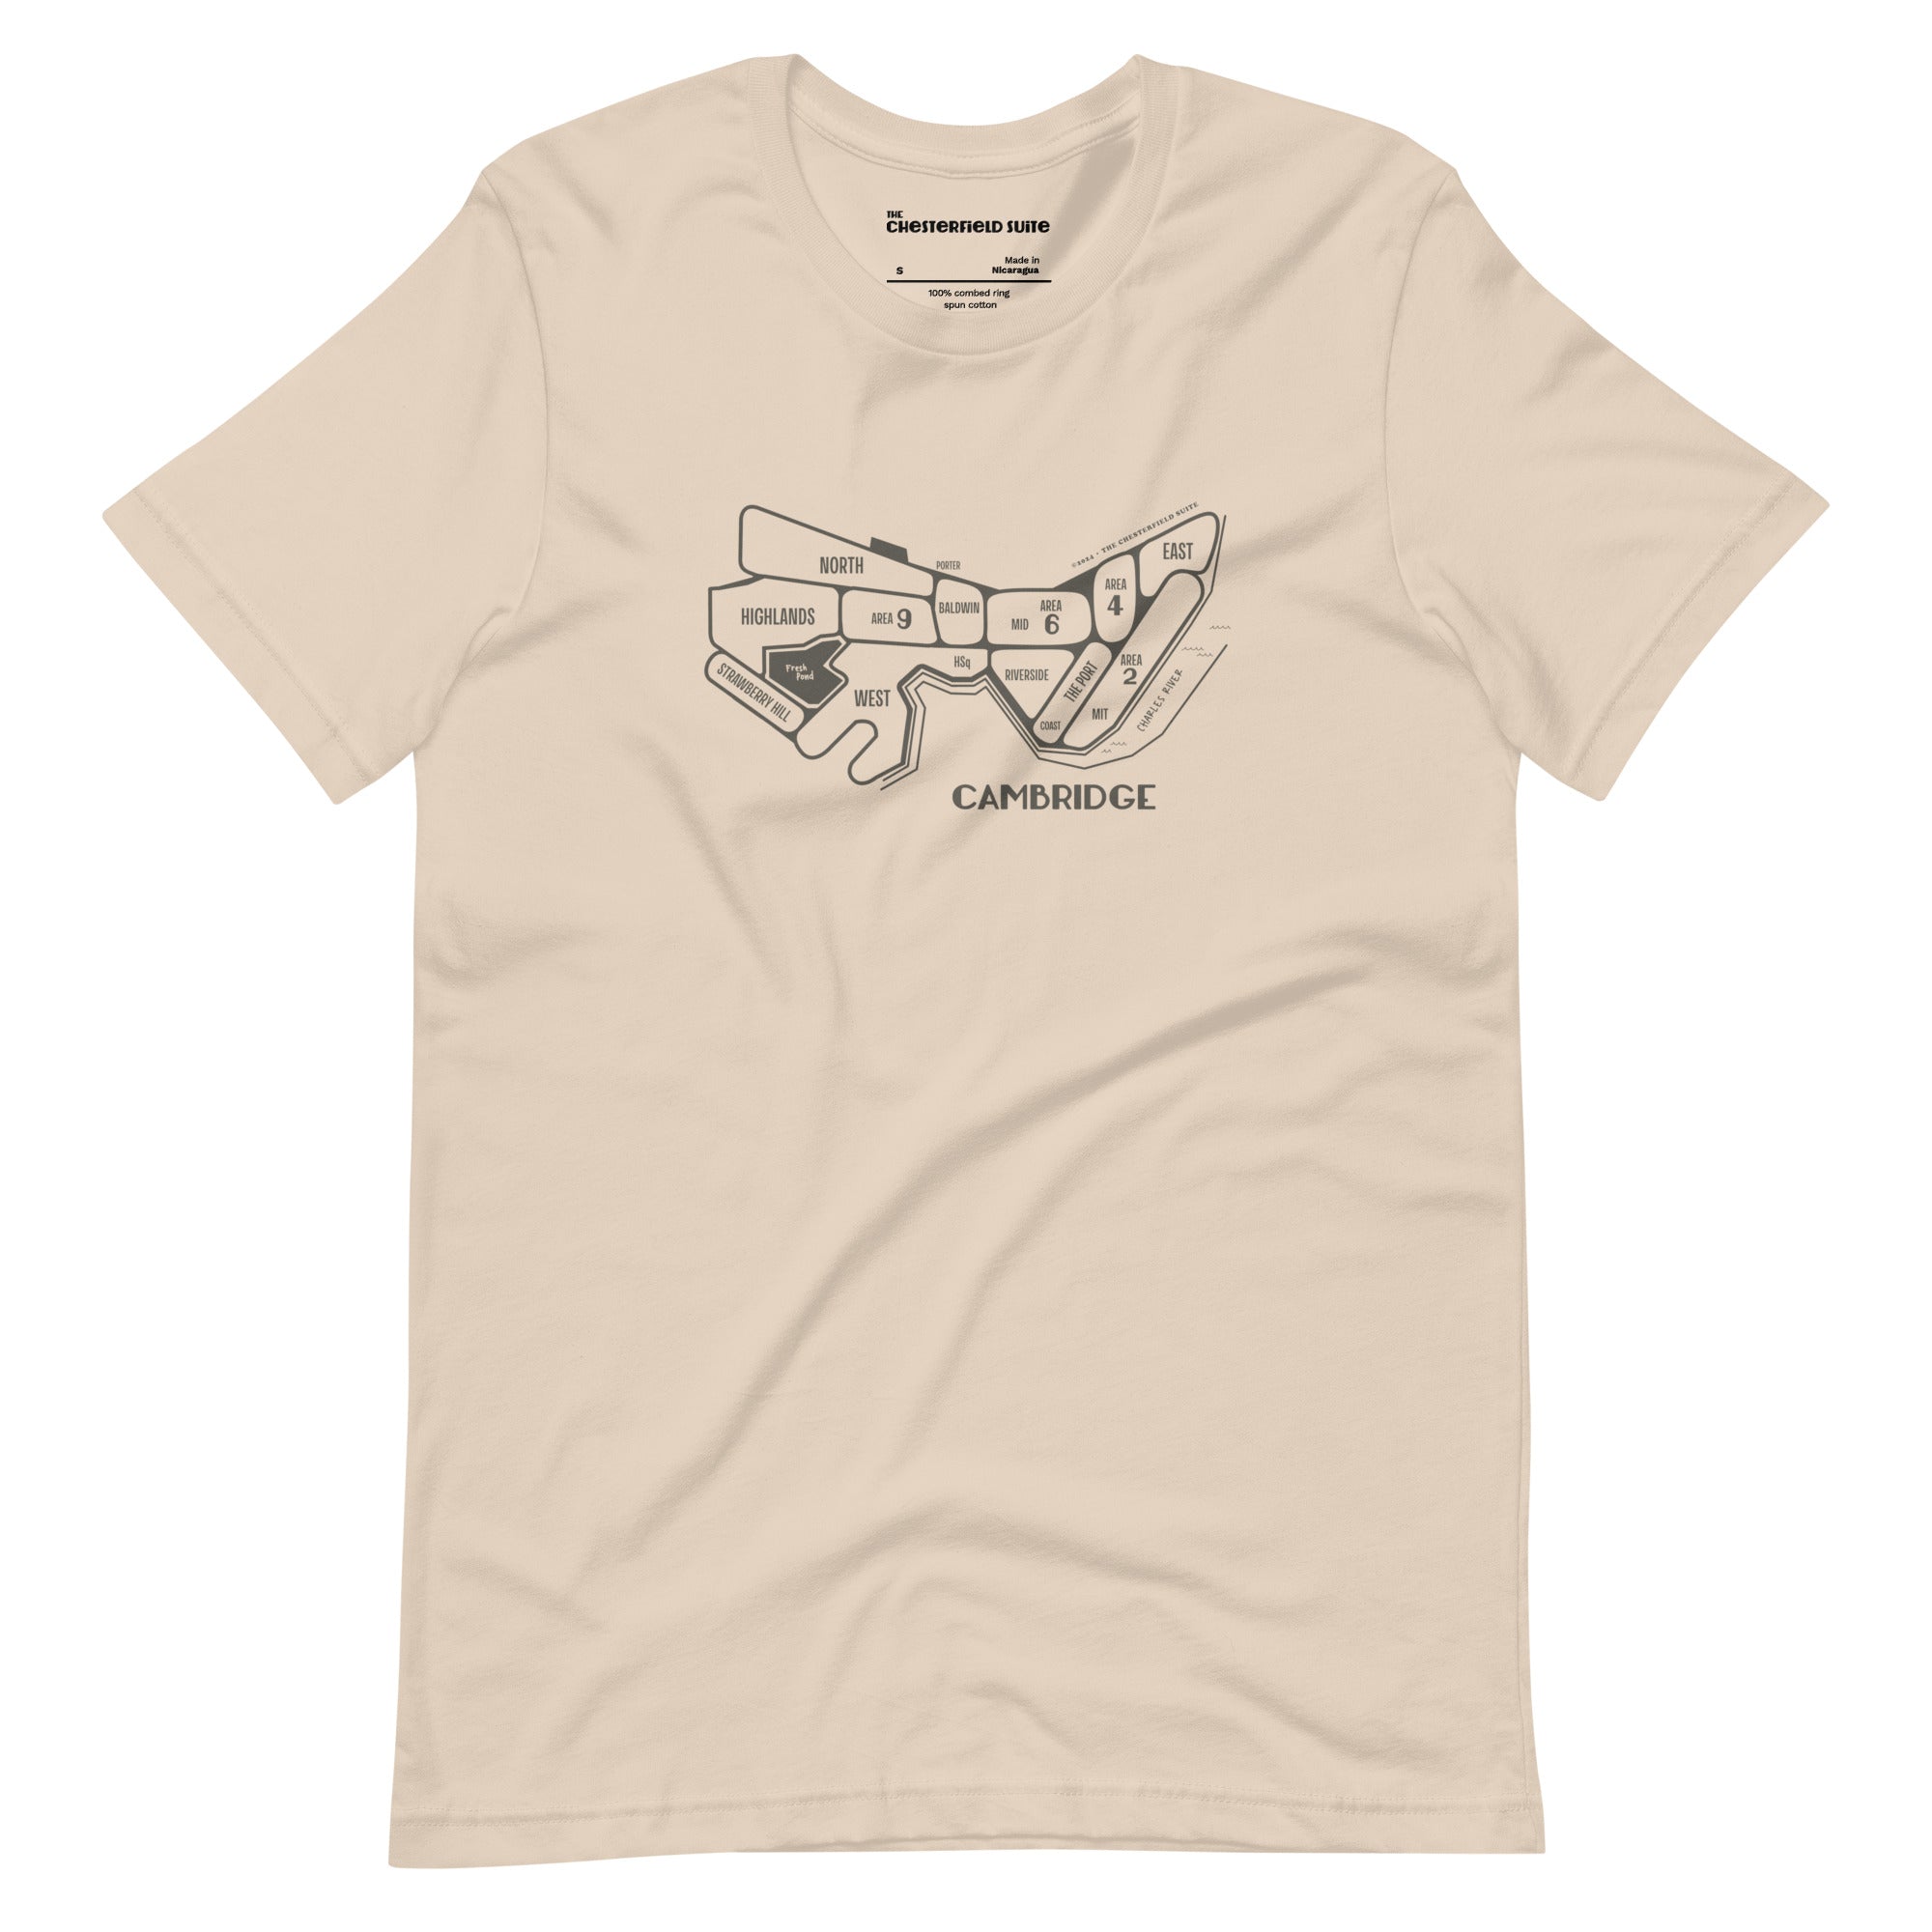 cream, tan unisex t-shirt with a hand drawn map of cambridge, ma in dark grey